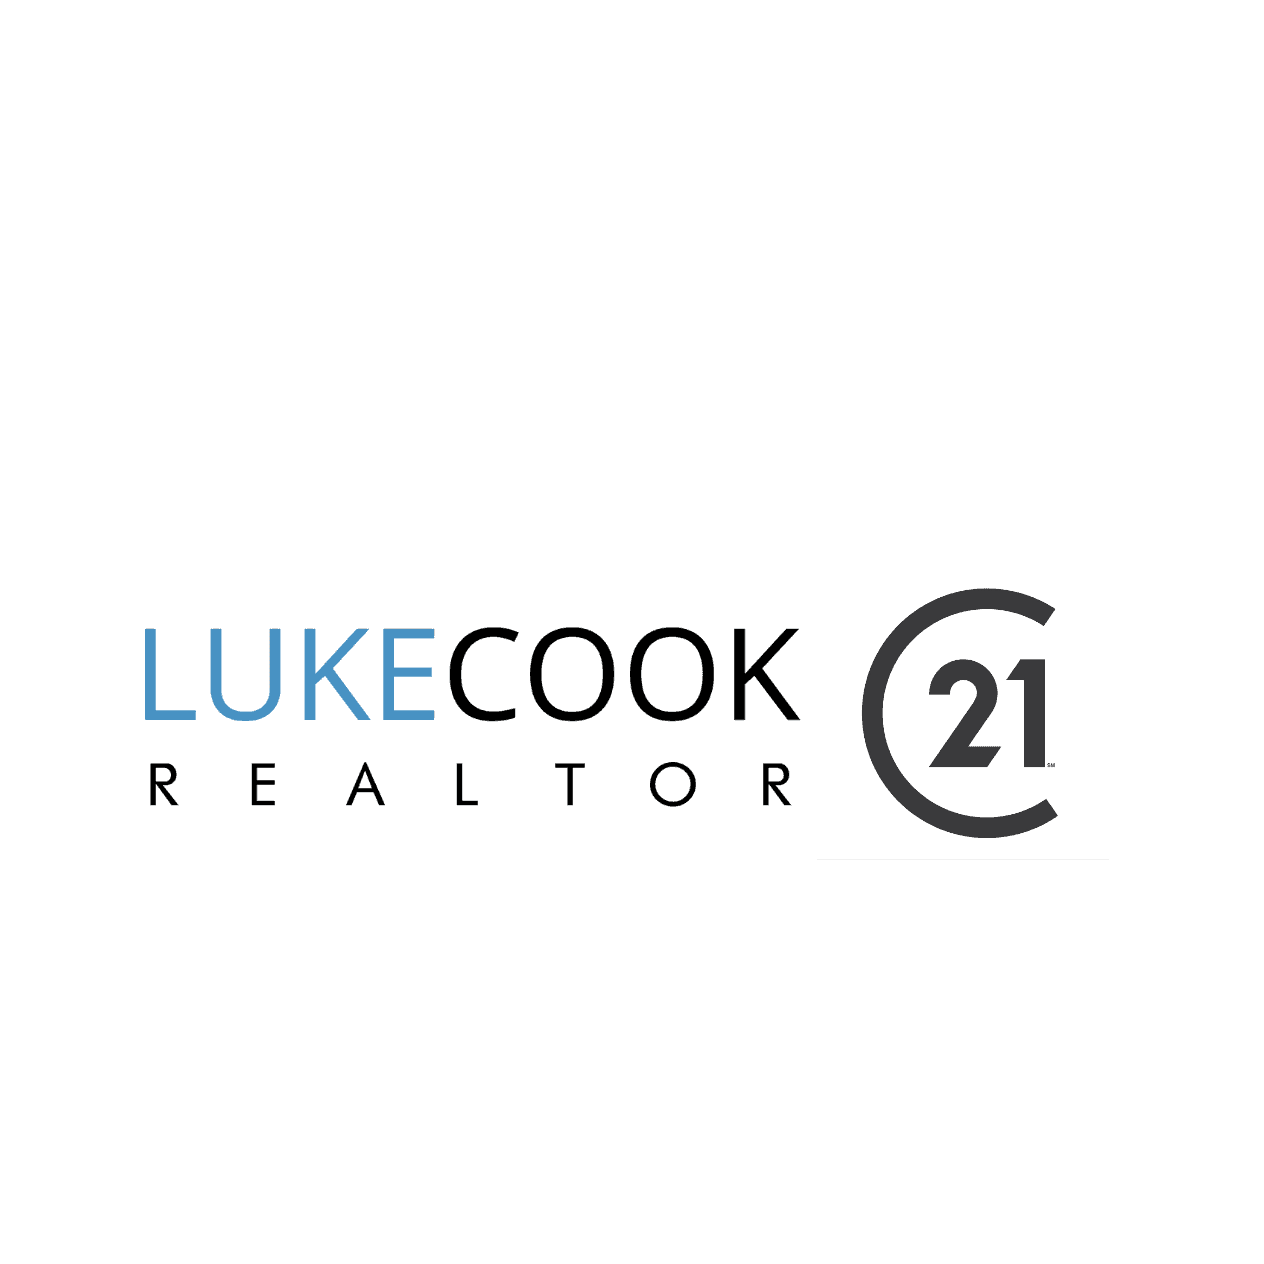 <p>Luke Cook Realtor</p> logo